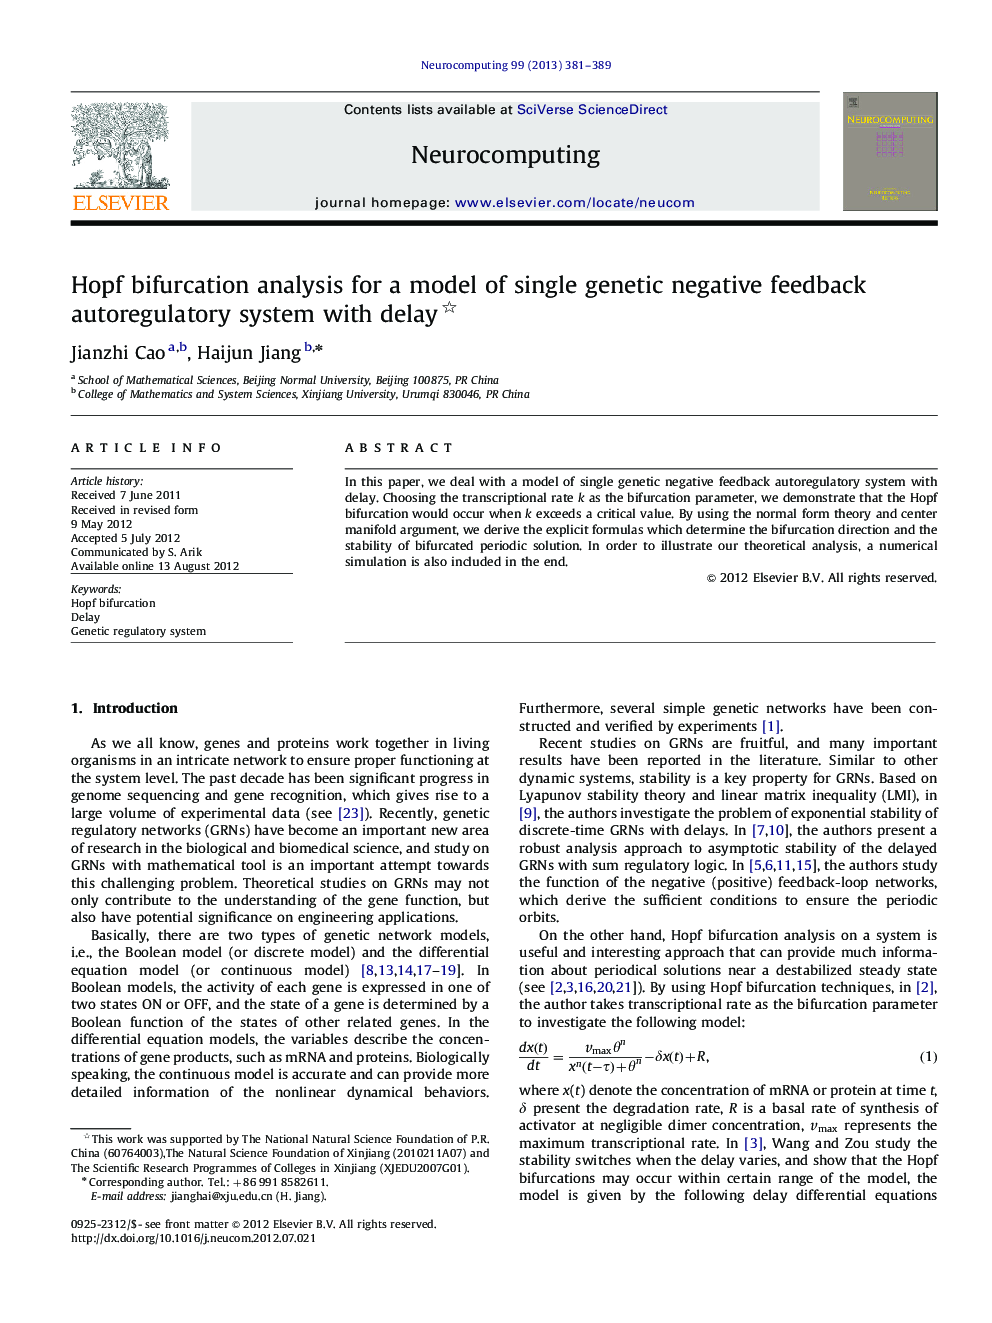 Hopf bifurcation analysis for a model of single genetic negative feedback autoregulatory system with delay 